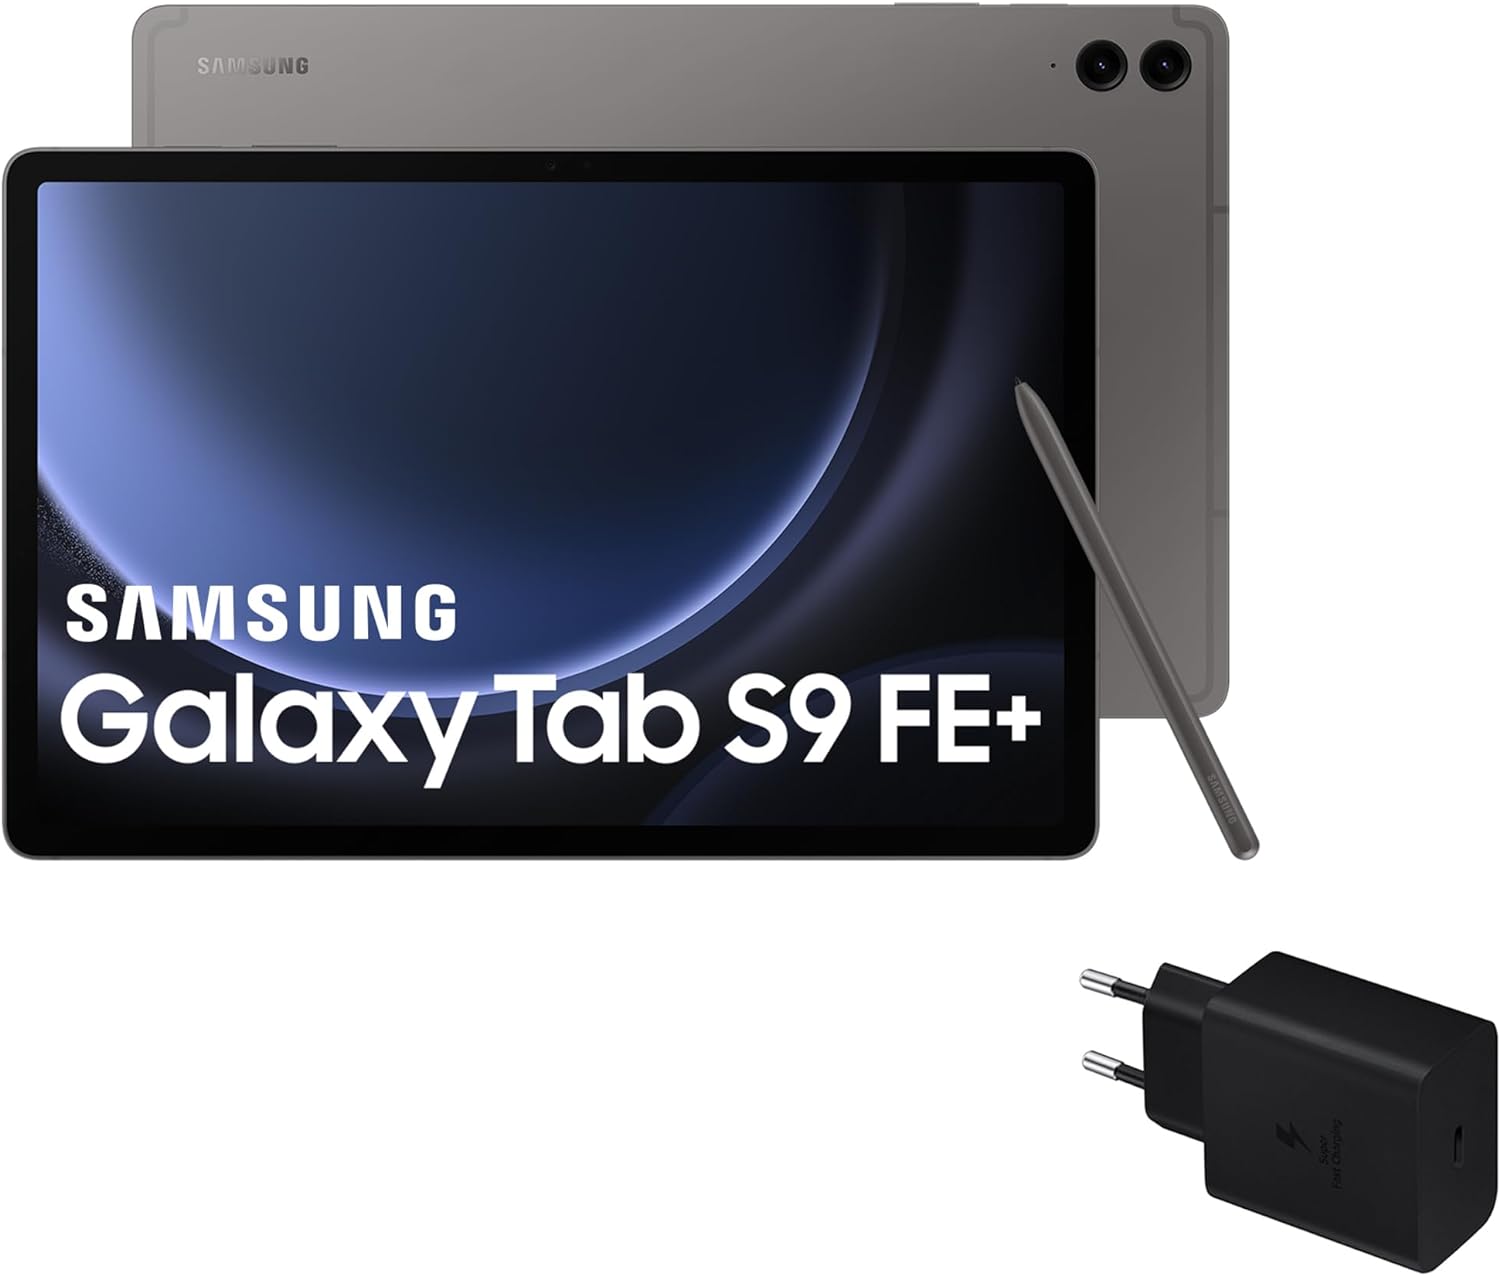 Samsung Galaxy Tab S9 FE+ vs Samsung Galaxy Tab S9 vs Samsung Galaxy Tab S9 FE